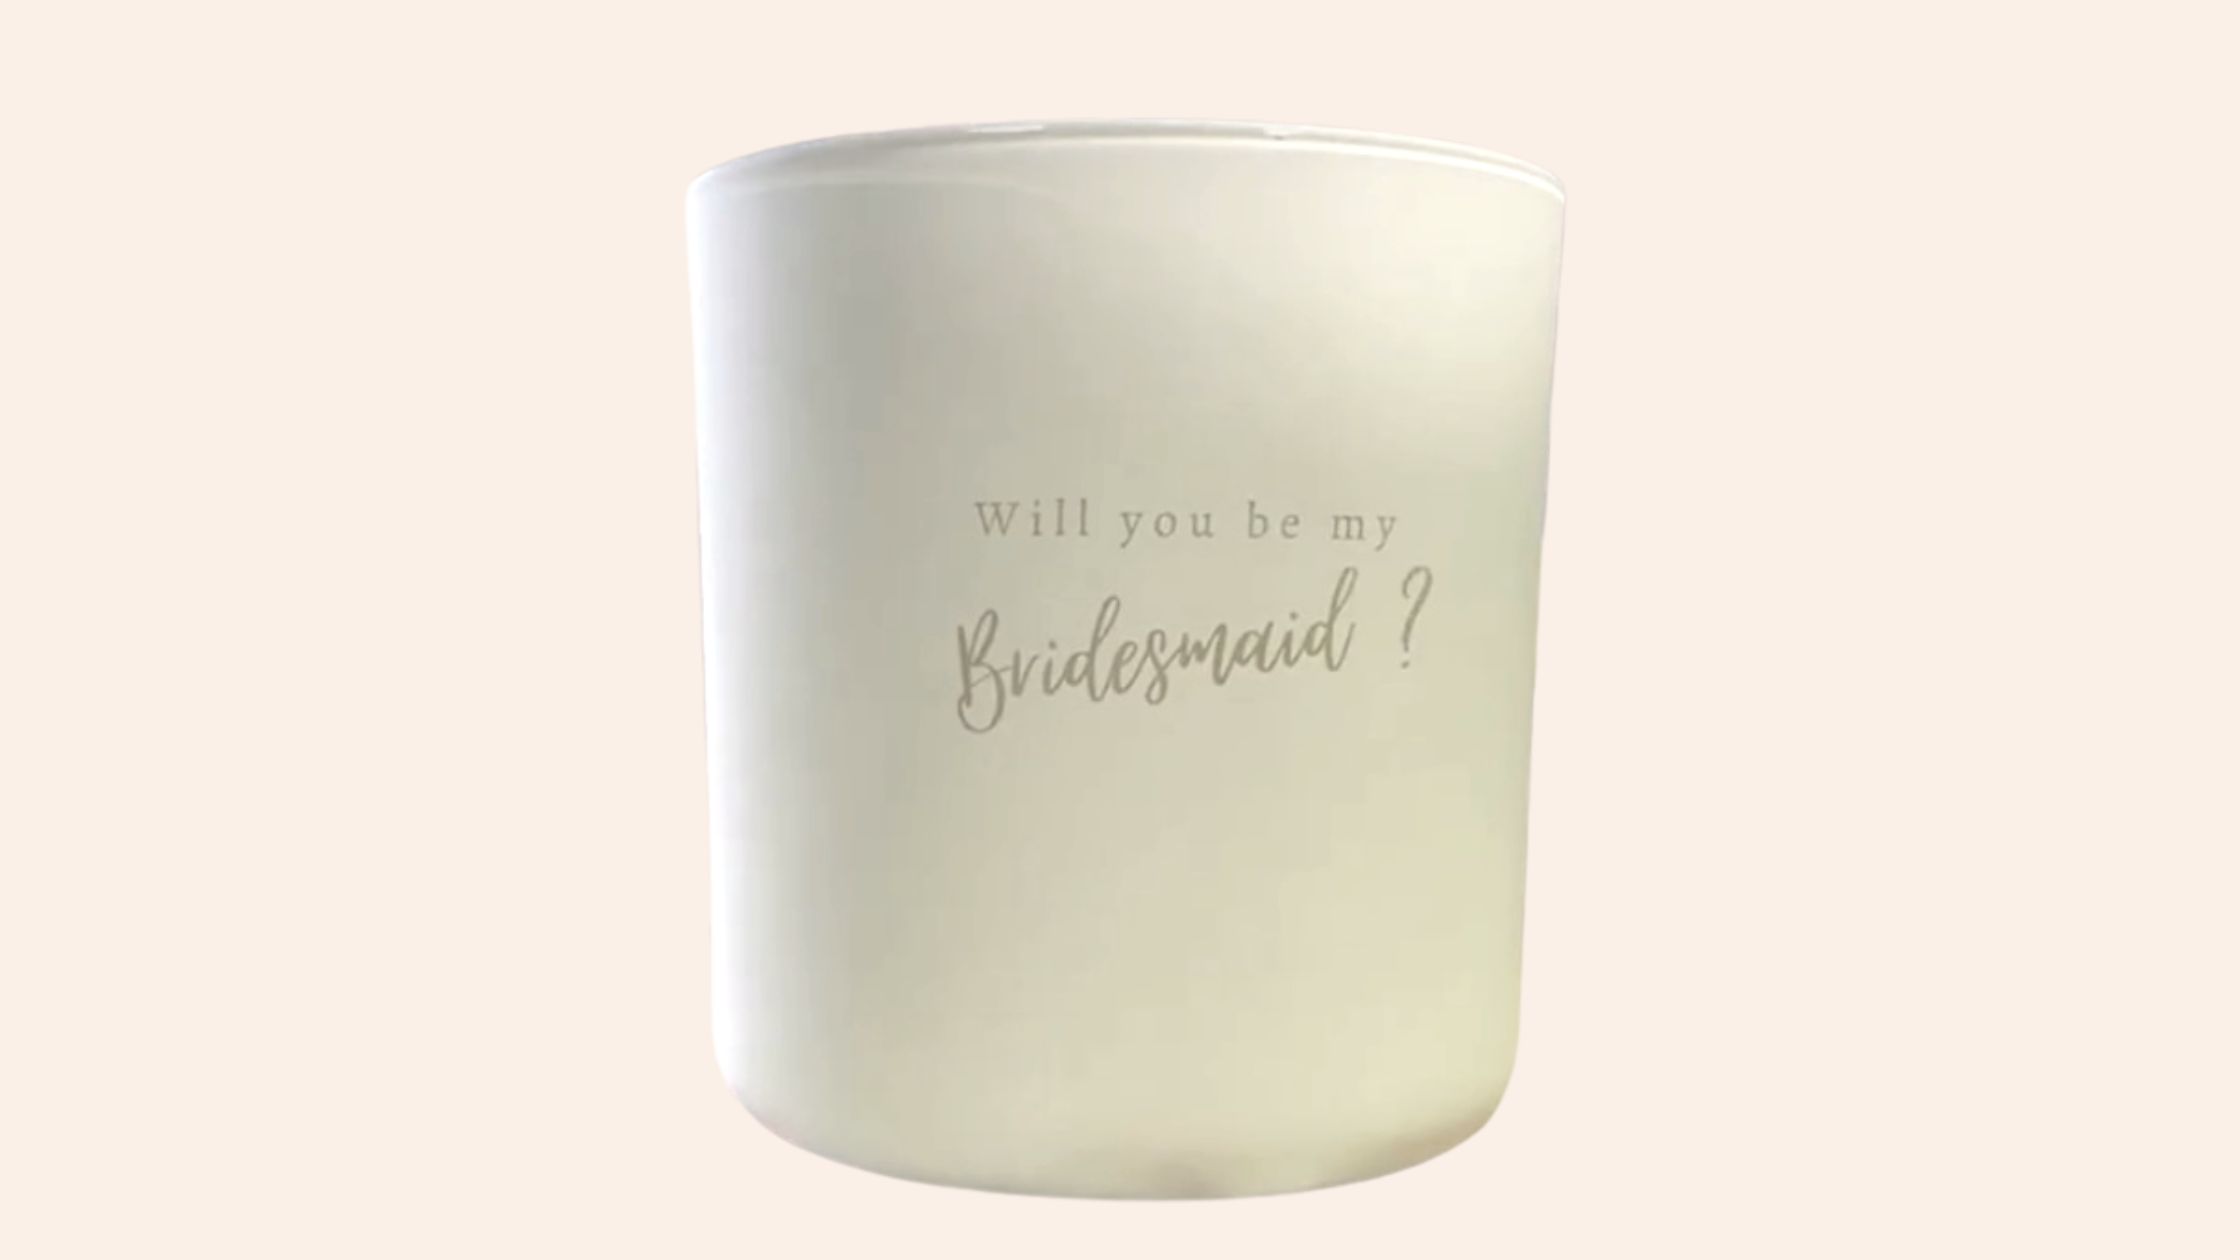 'Will you be my bridesmaid' jar